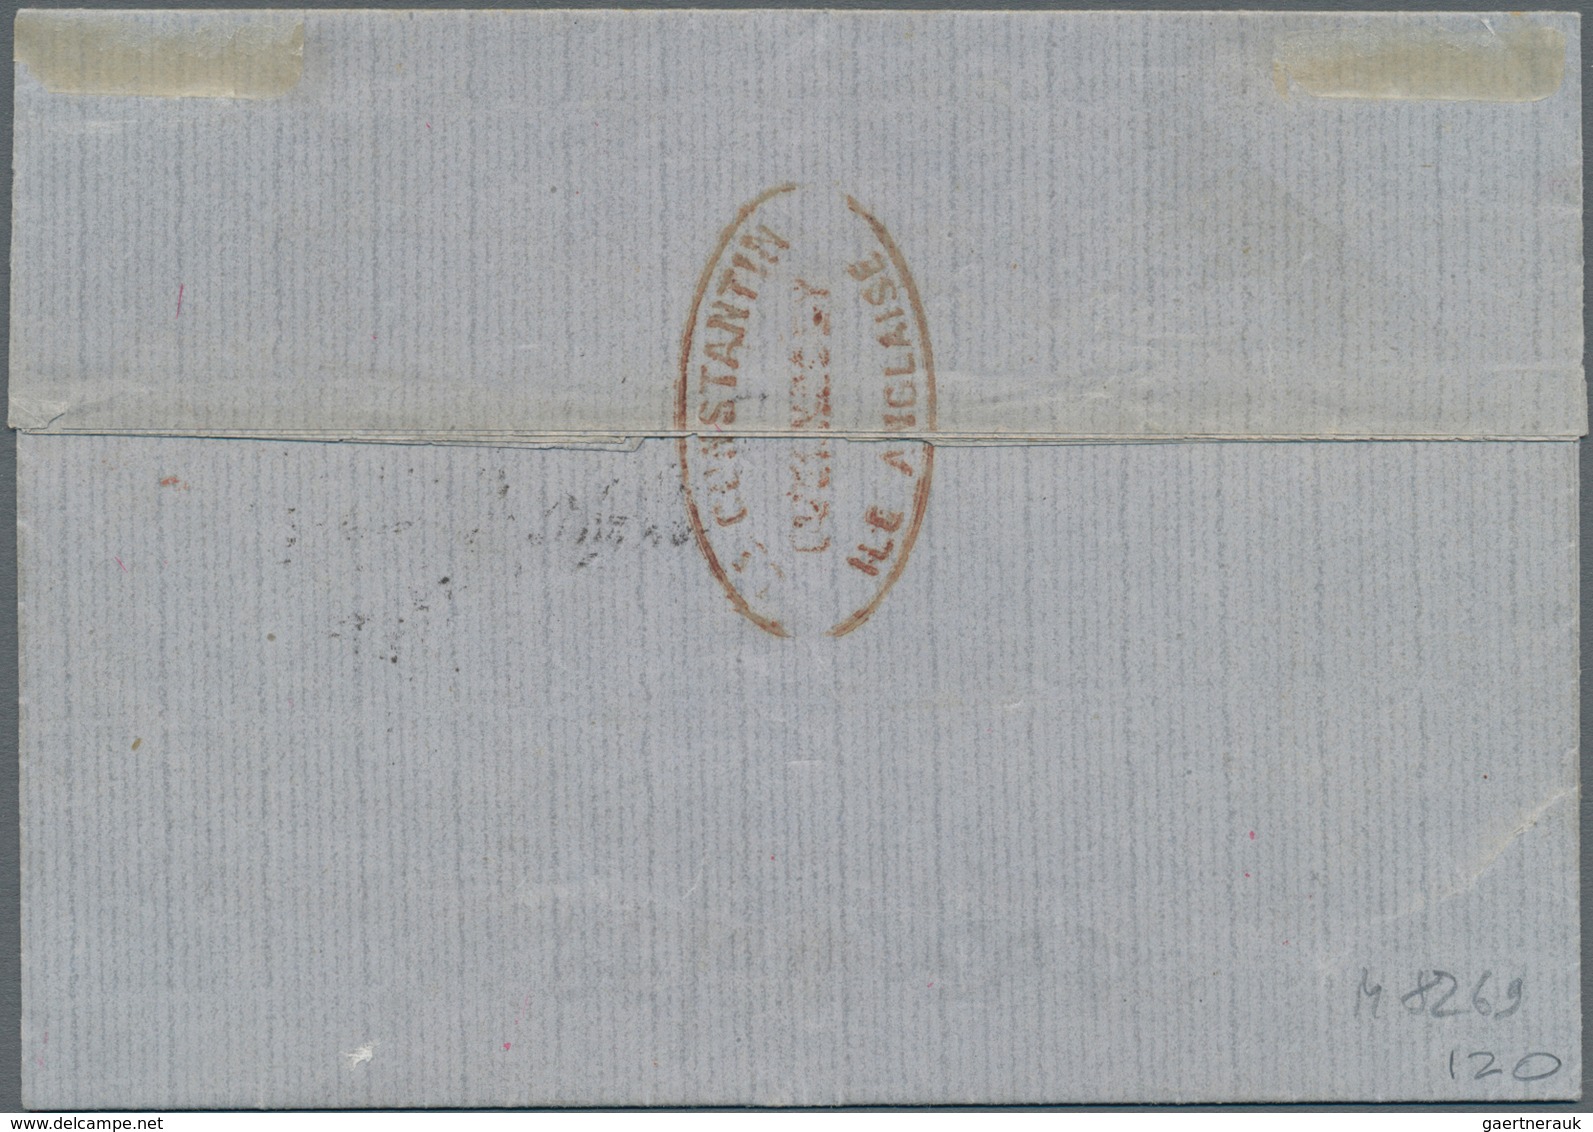 Großbritannien - Guernsey: 1883, Entire Letter From Guernsey 24 Mar 1883 To St.Malo/France, Franked - Guernsey